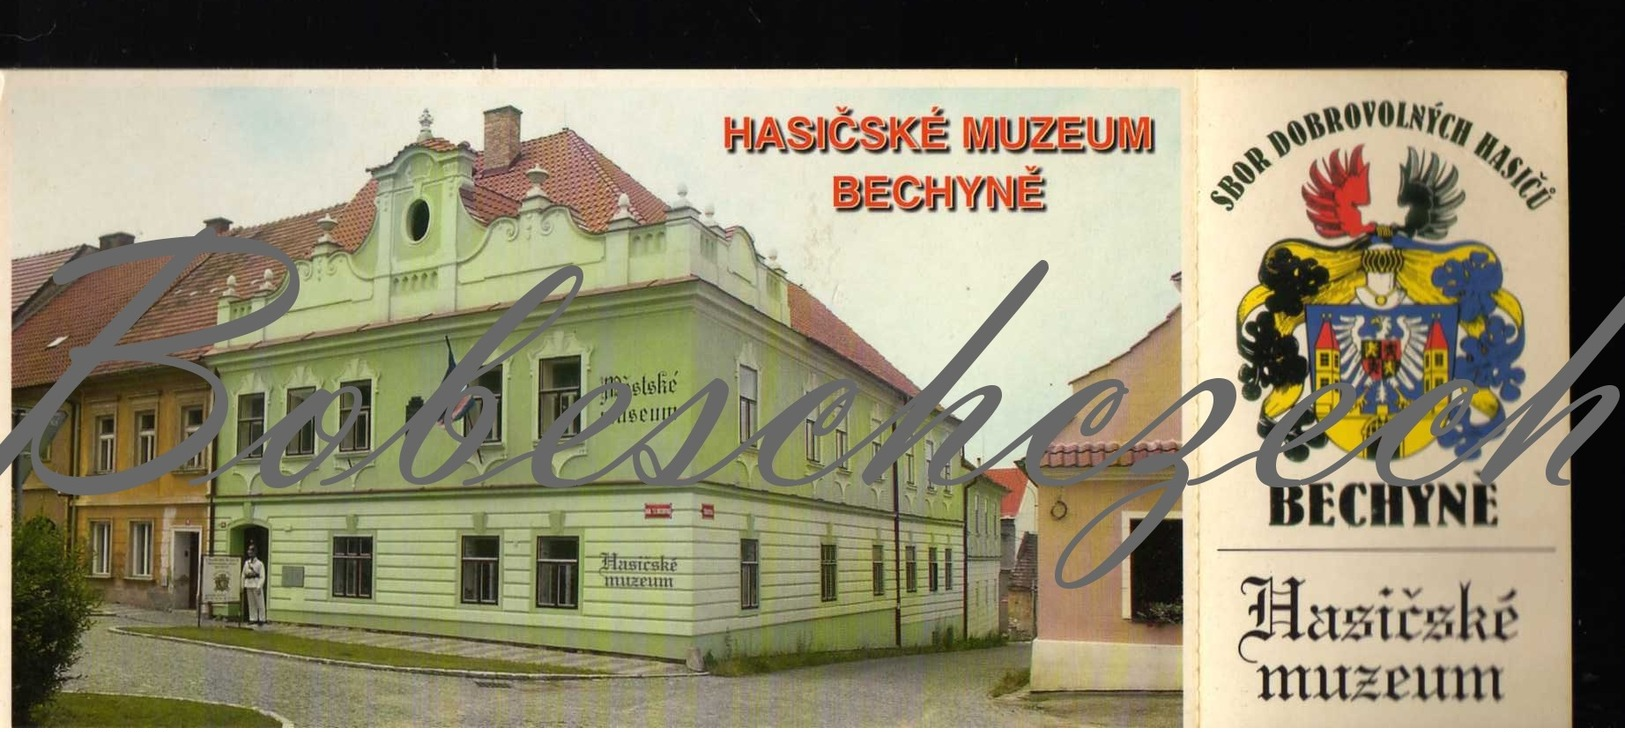 8-1257 CZECH REPUBLIC 2001 Ticket Admission 30,-CZK + Museum Of Fire In Bechyne Coat Of Arms 21x8,9cm Postcard - Eintrittskarten